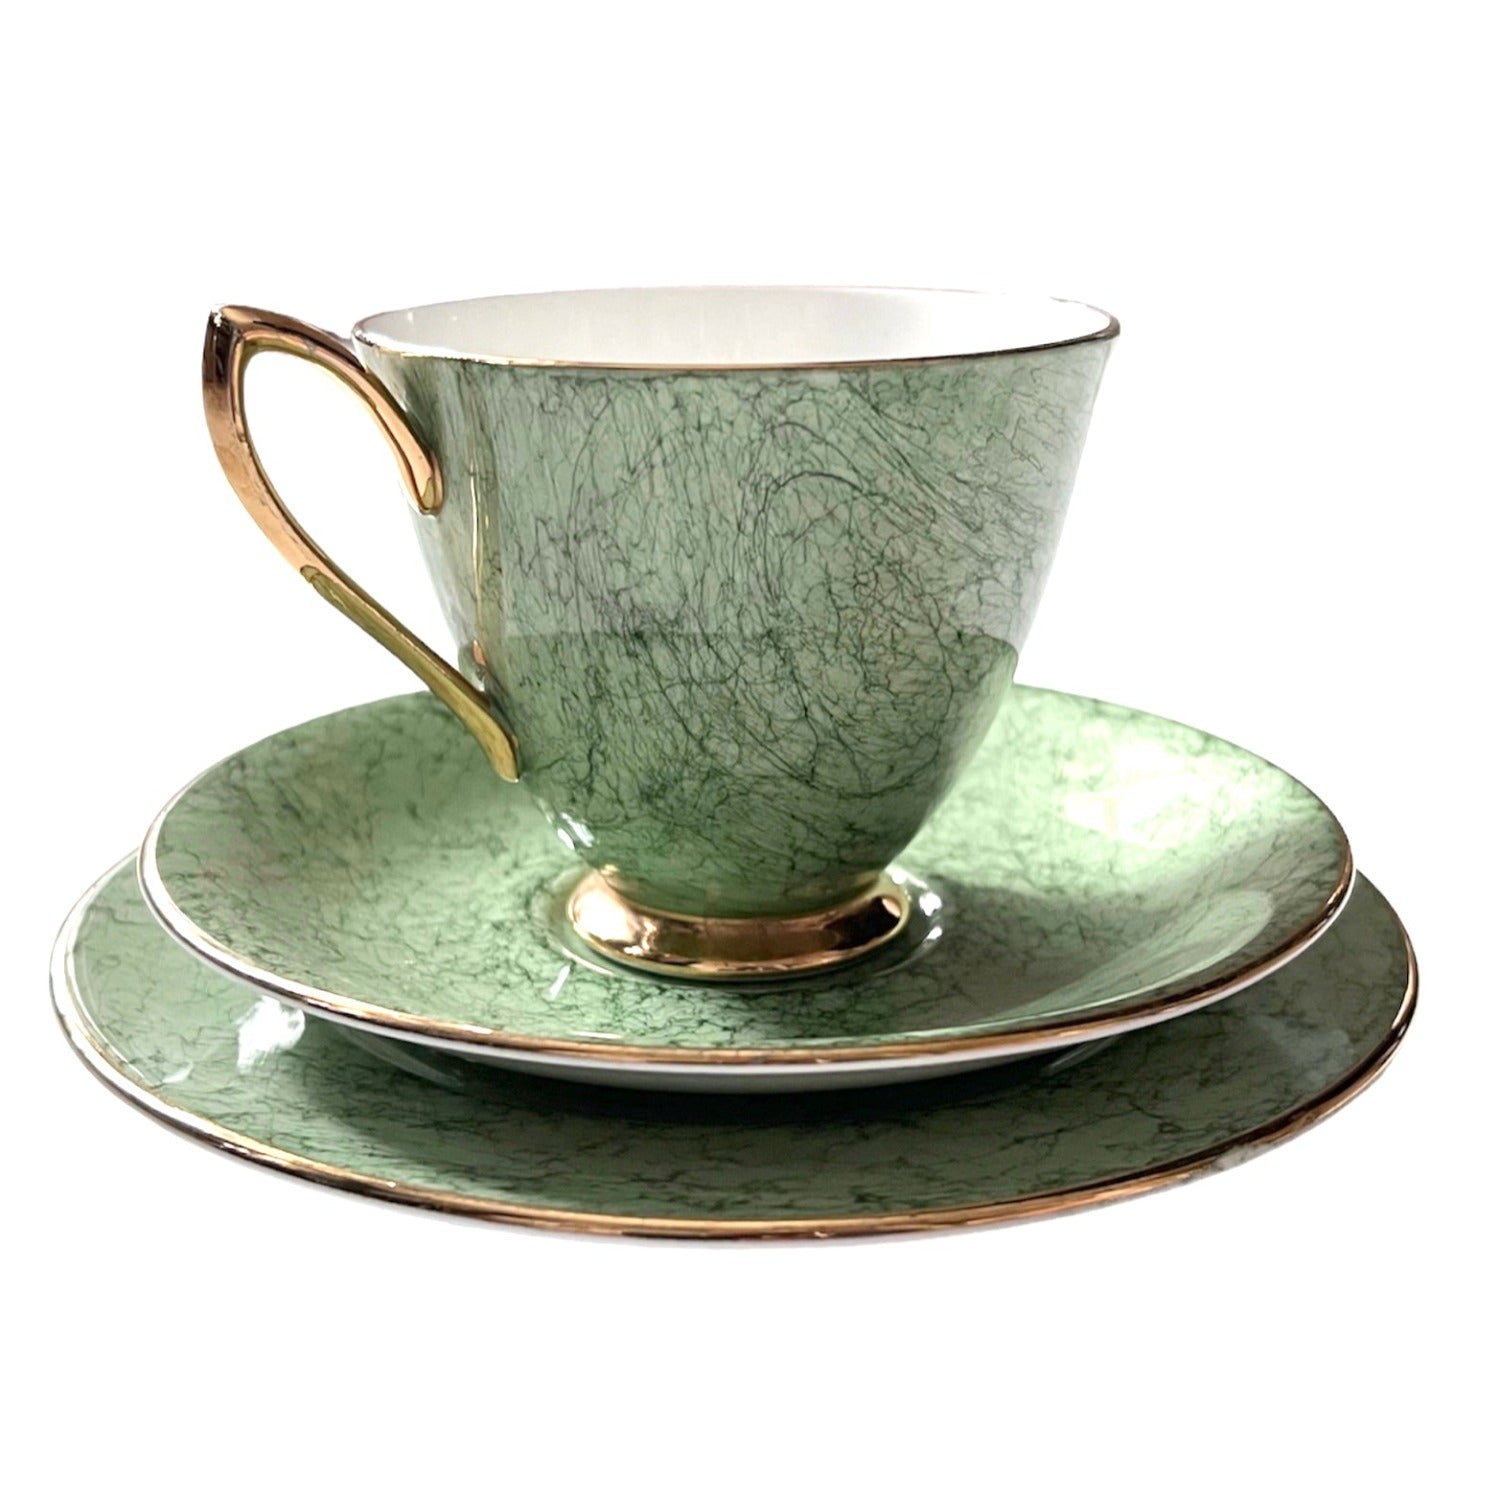 Antique China Teacup Set - Key Lime